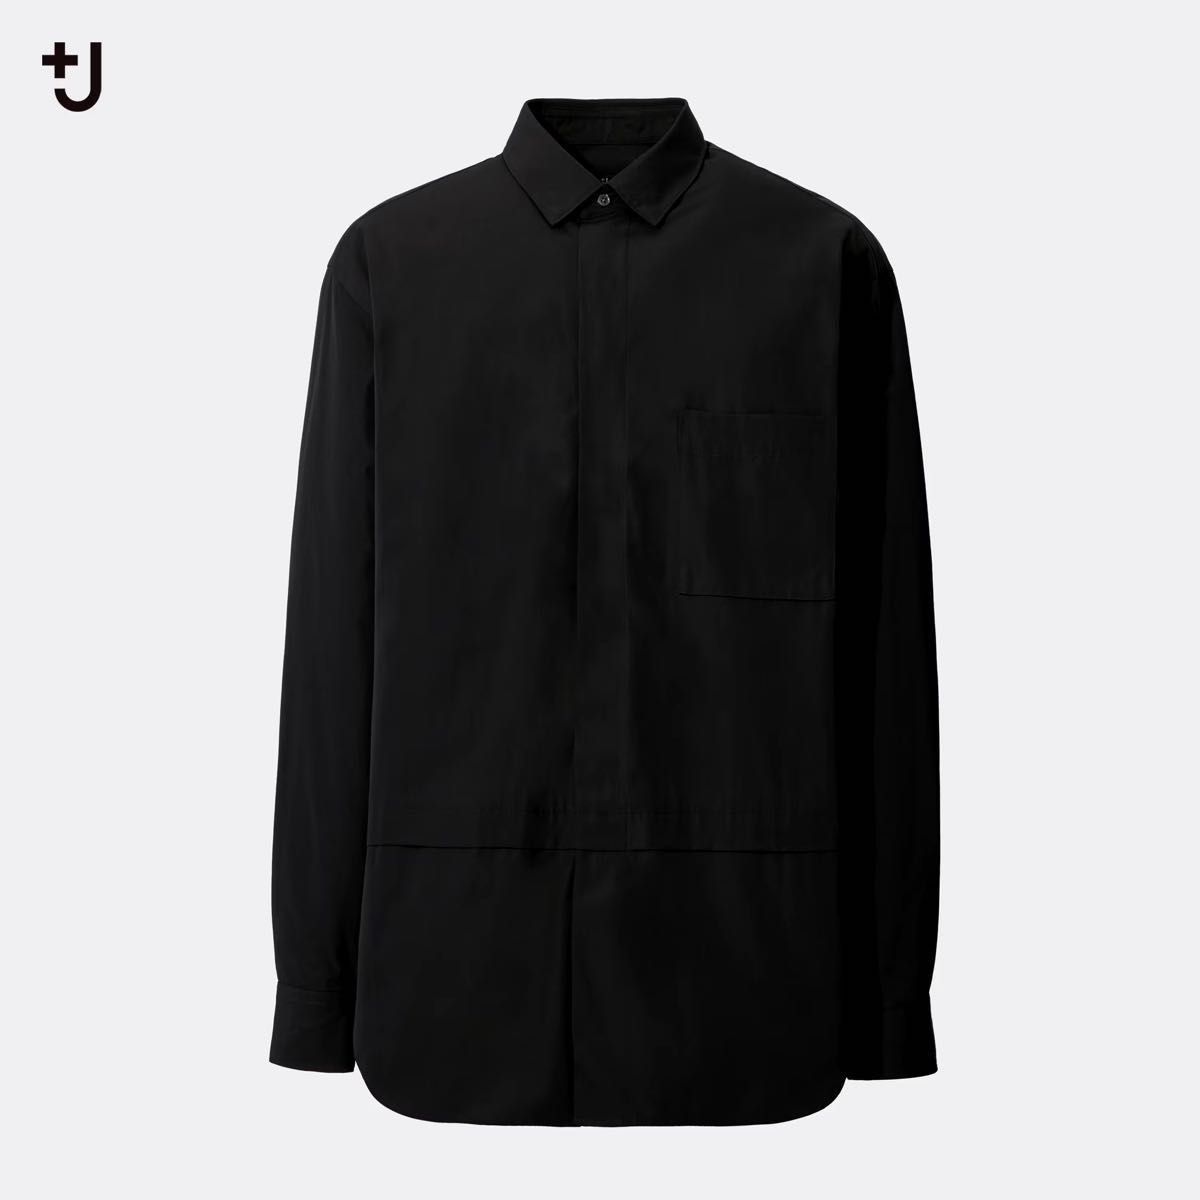 UNIQLO+J スーピマコットンオーバーサイズシャツ ブラック Lサイズ / ユニクロ JIL SANDER